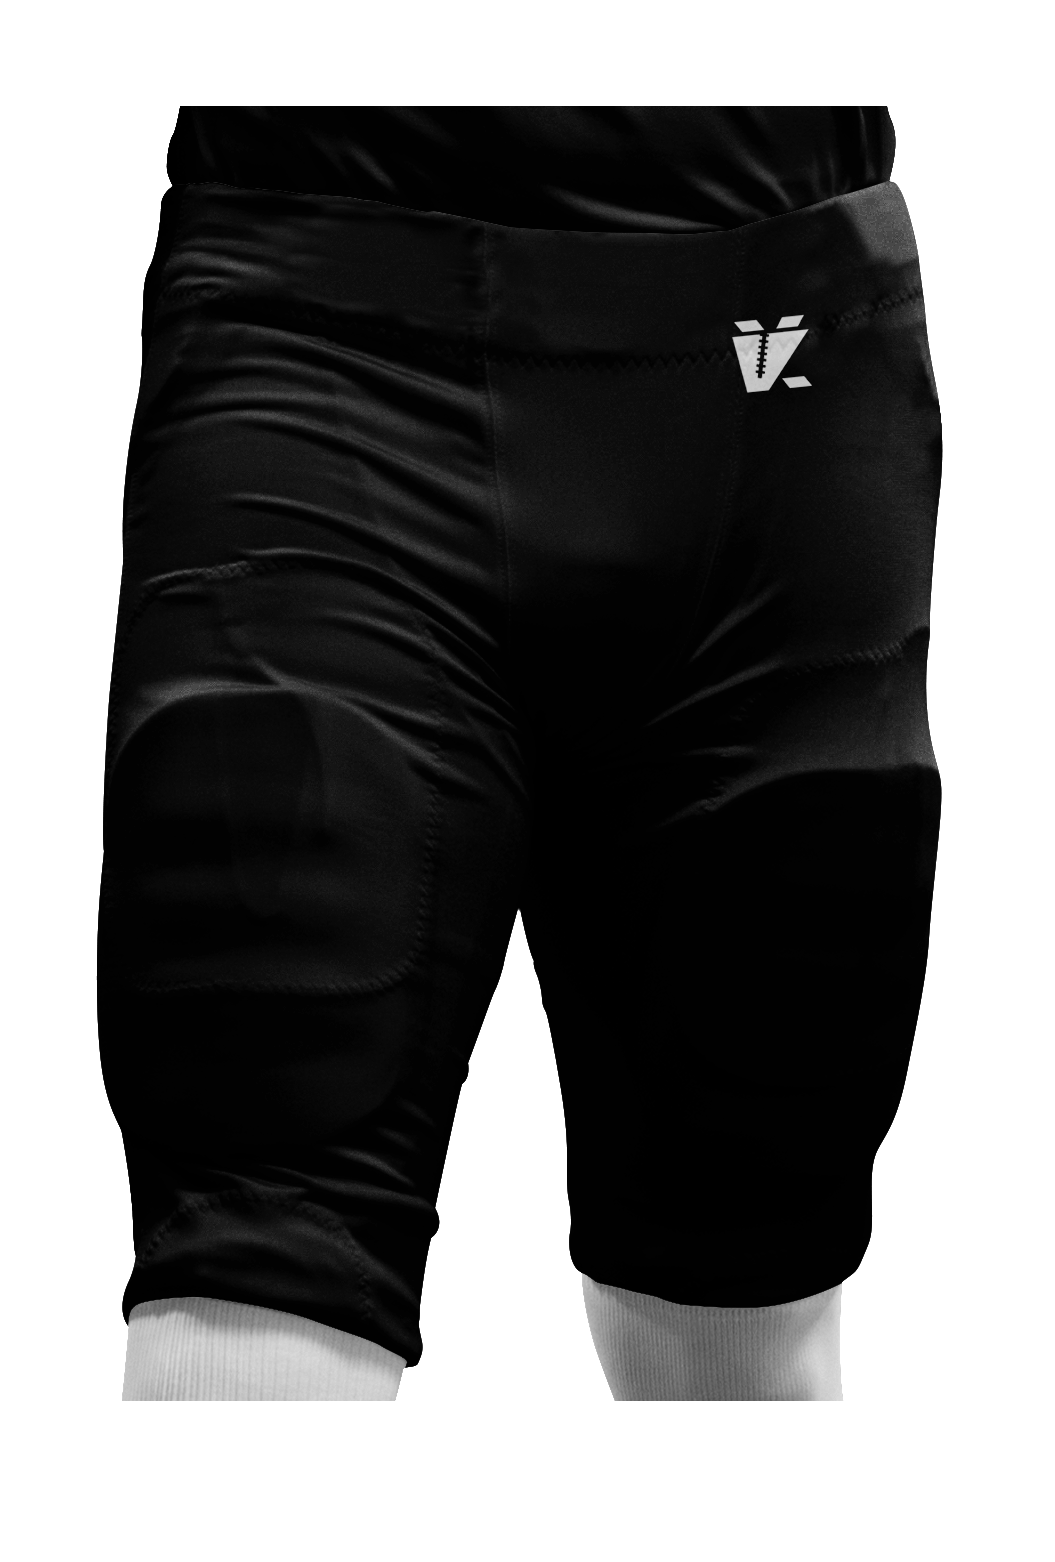 Varsity X Uniforms Black Pants.png__PID:bfd1d256-6d70-438a-a203-c60a2267cd14